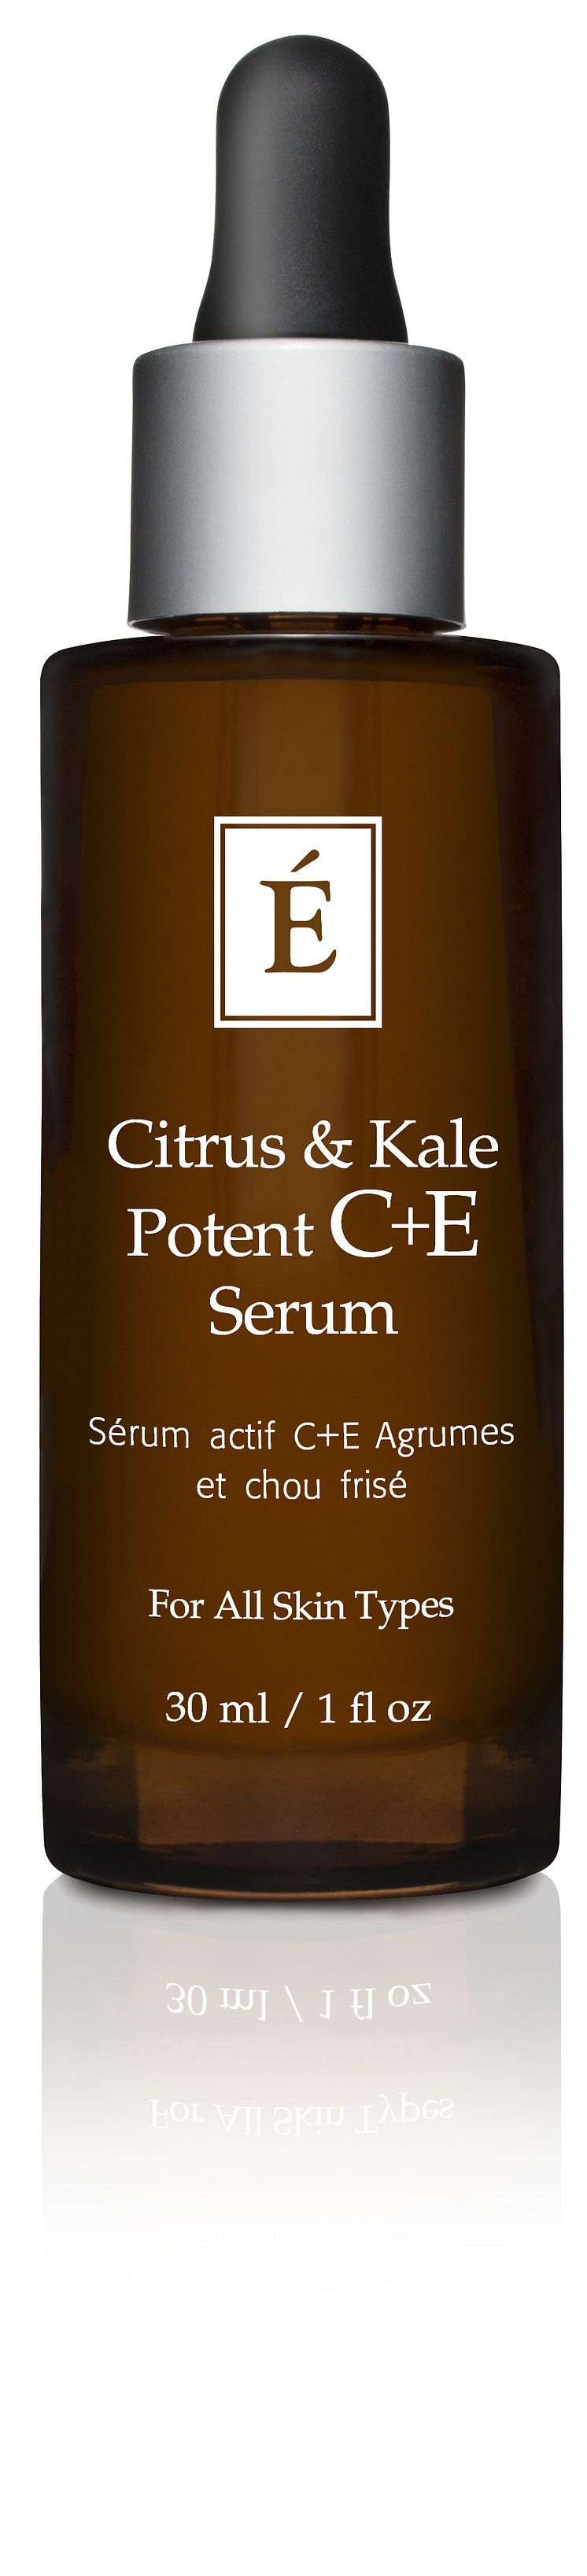 11300 Citrus & Kale Potent C+E Serum